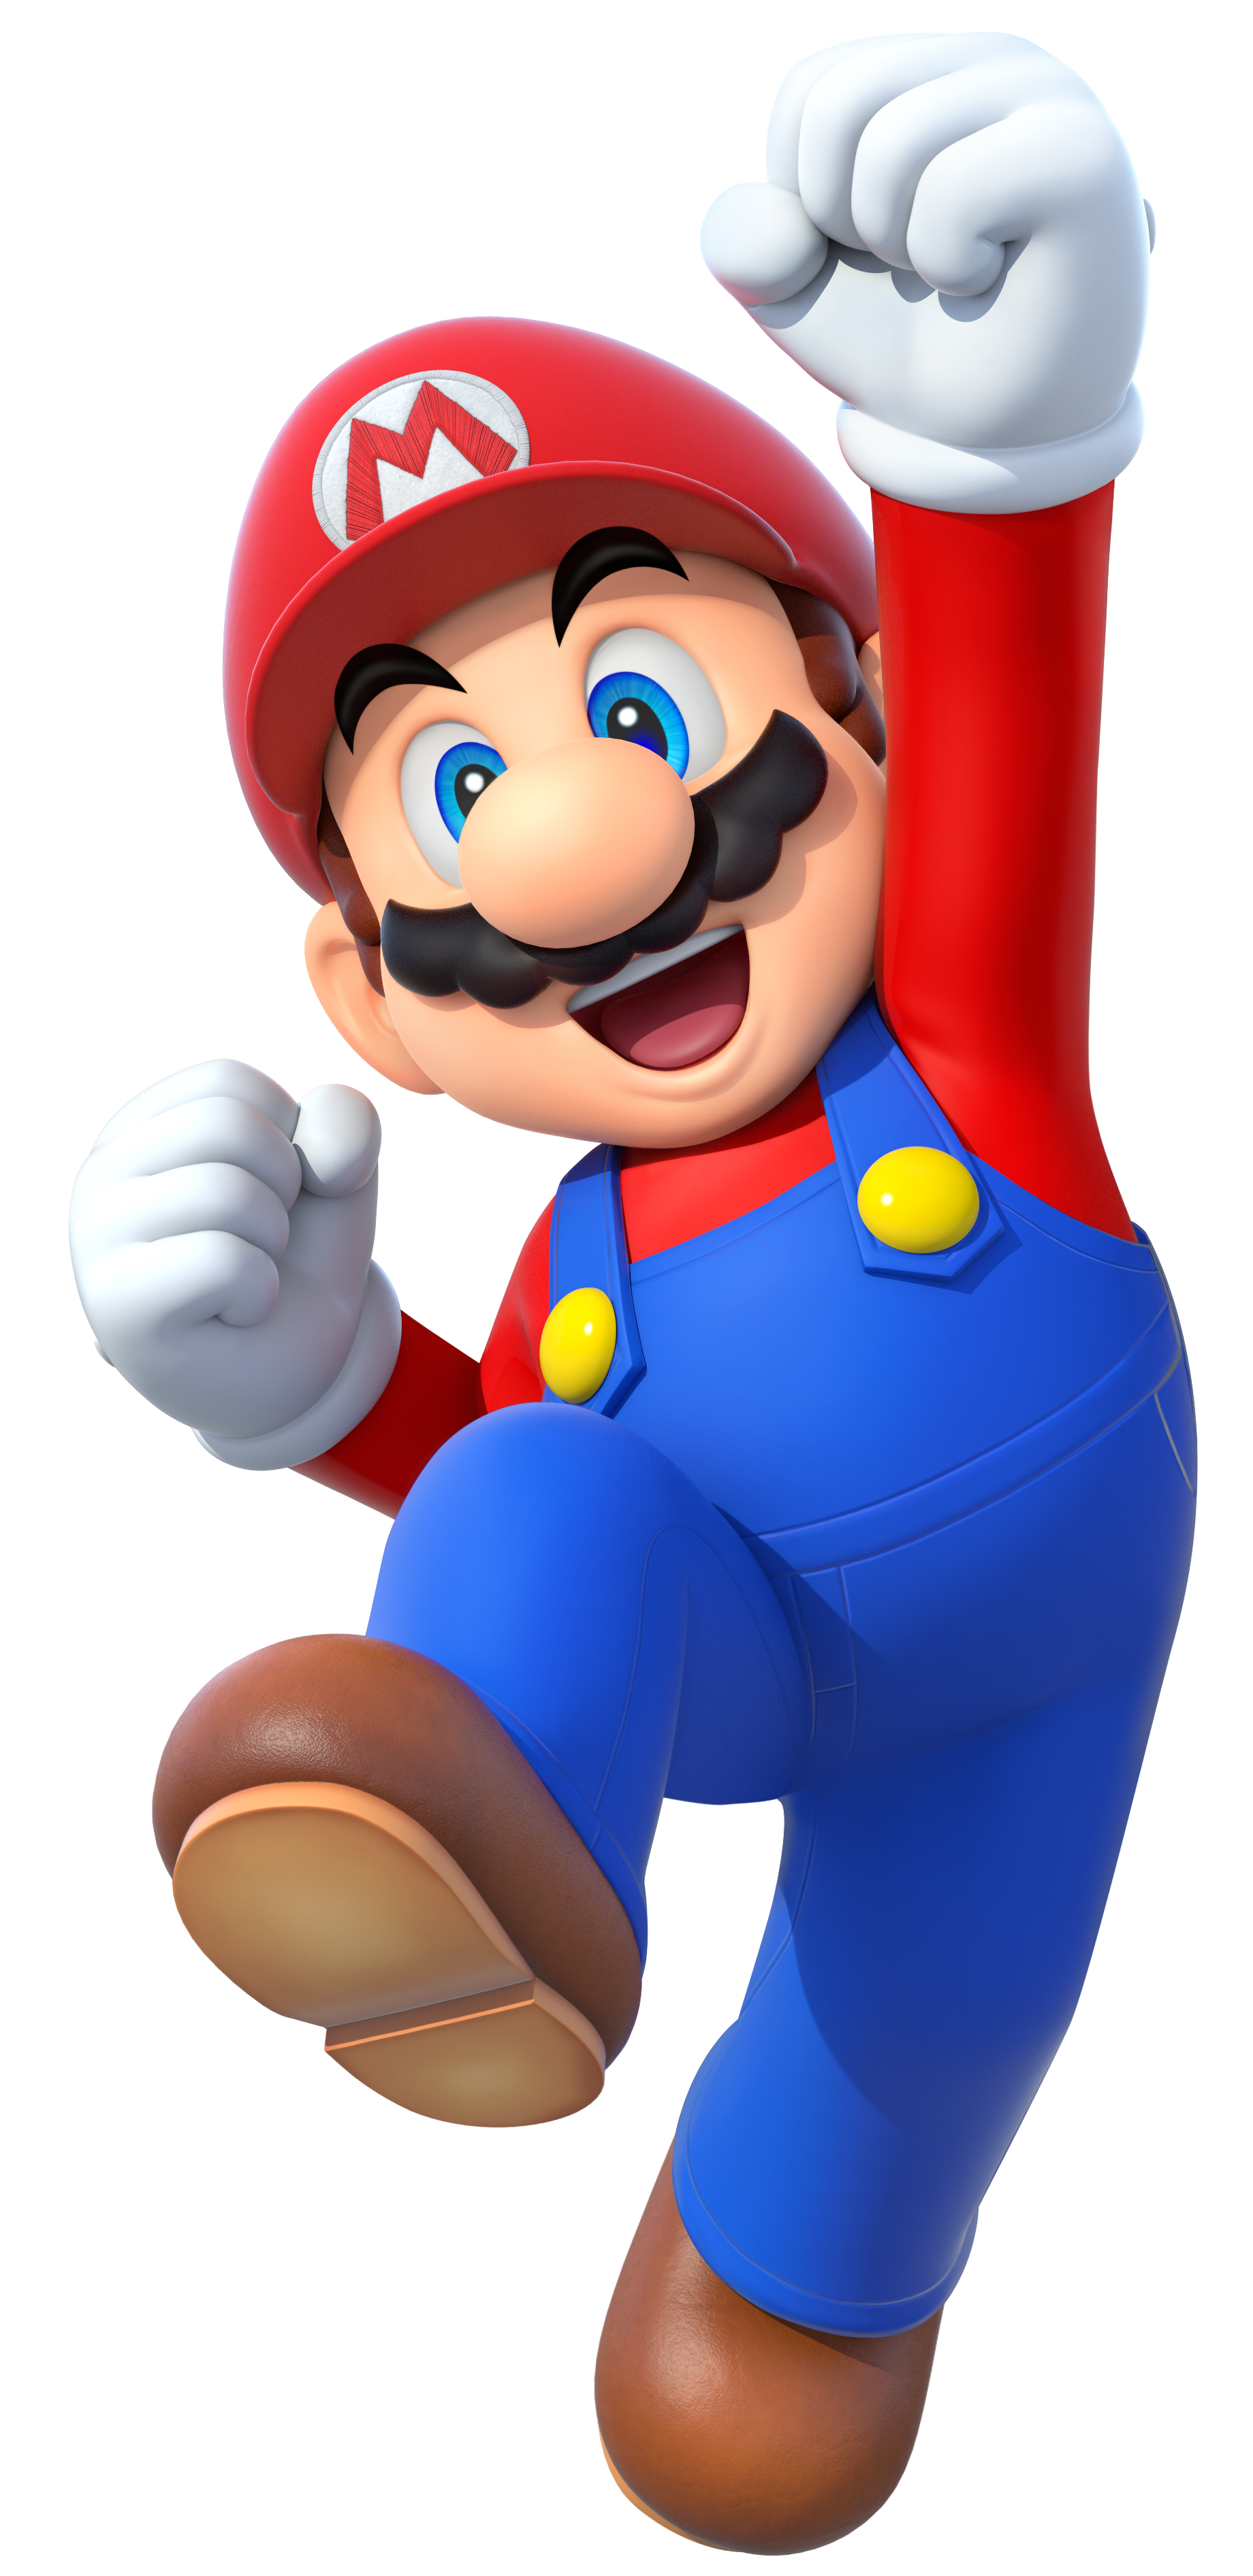 Mario Party: Superstar Birthday | Fantendo - Nintendo Fanon Wiki | Fandom powered by Wikia